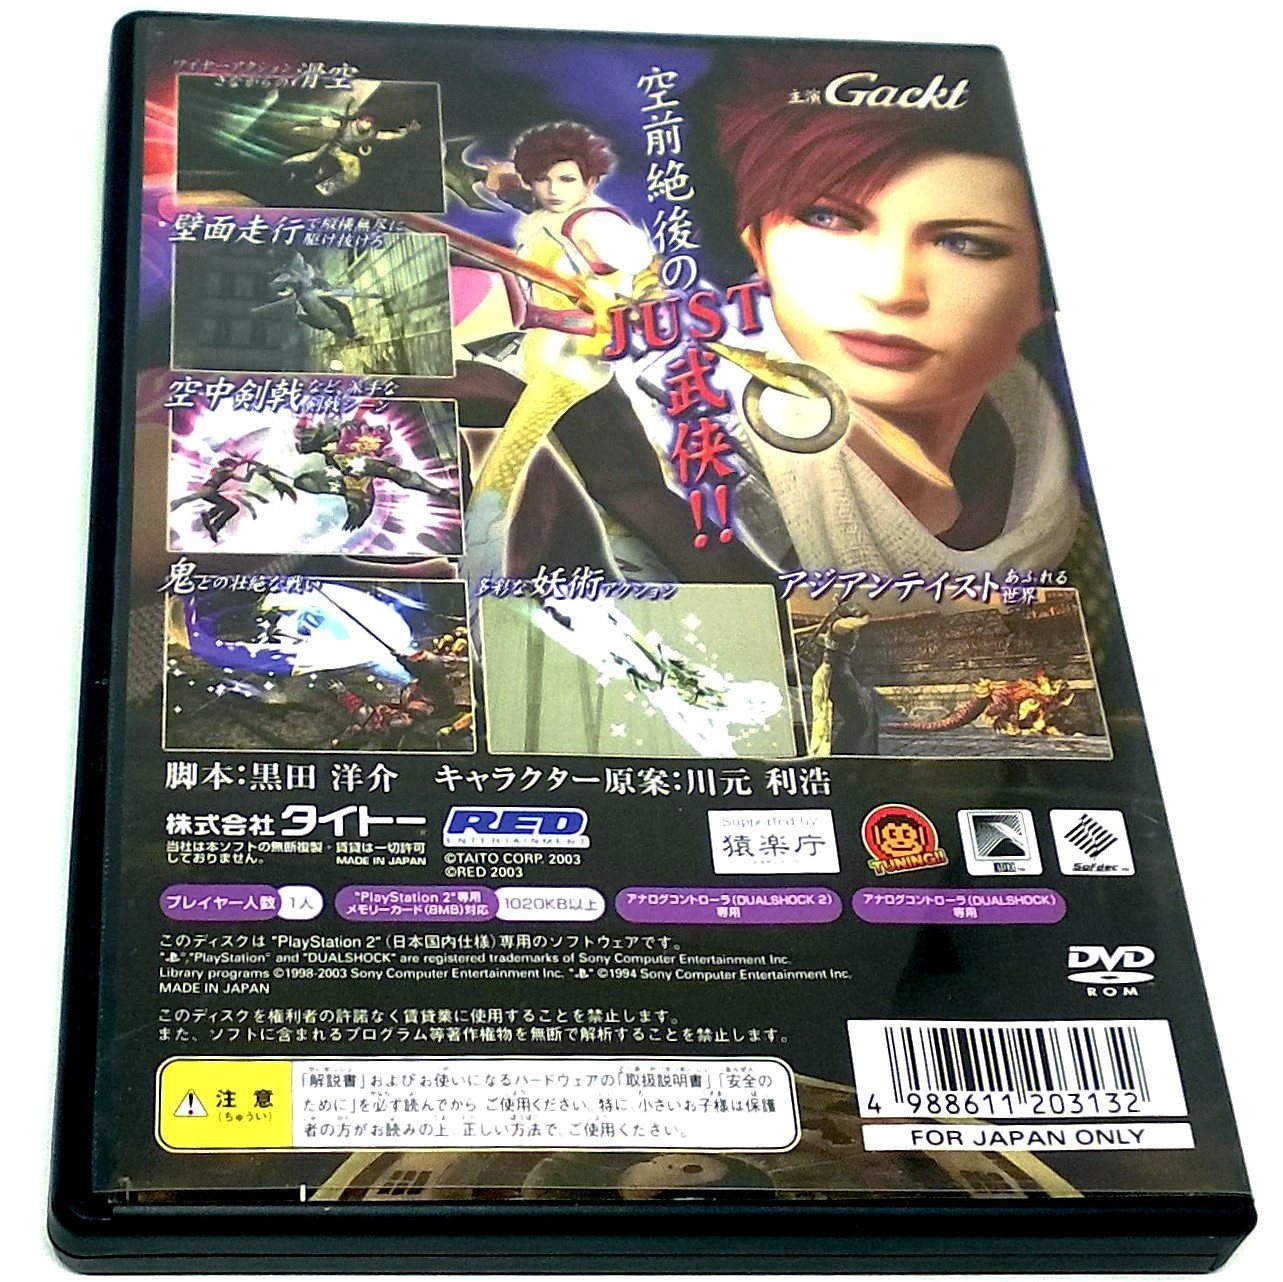 Bujingai for PlayStation 2 (Import) - Back of case